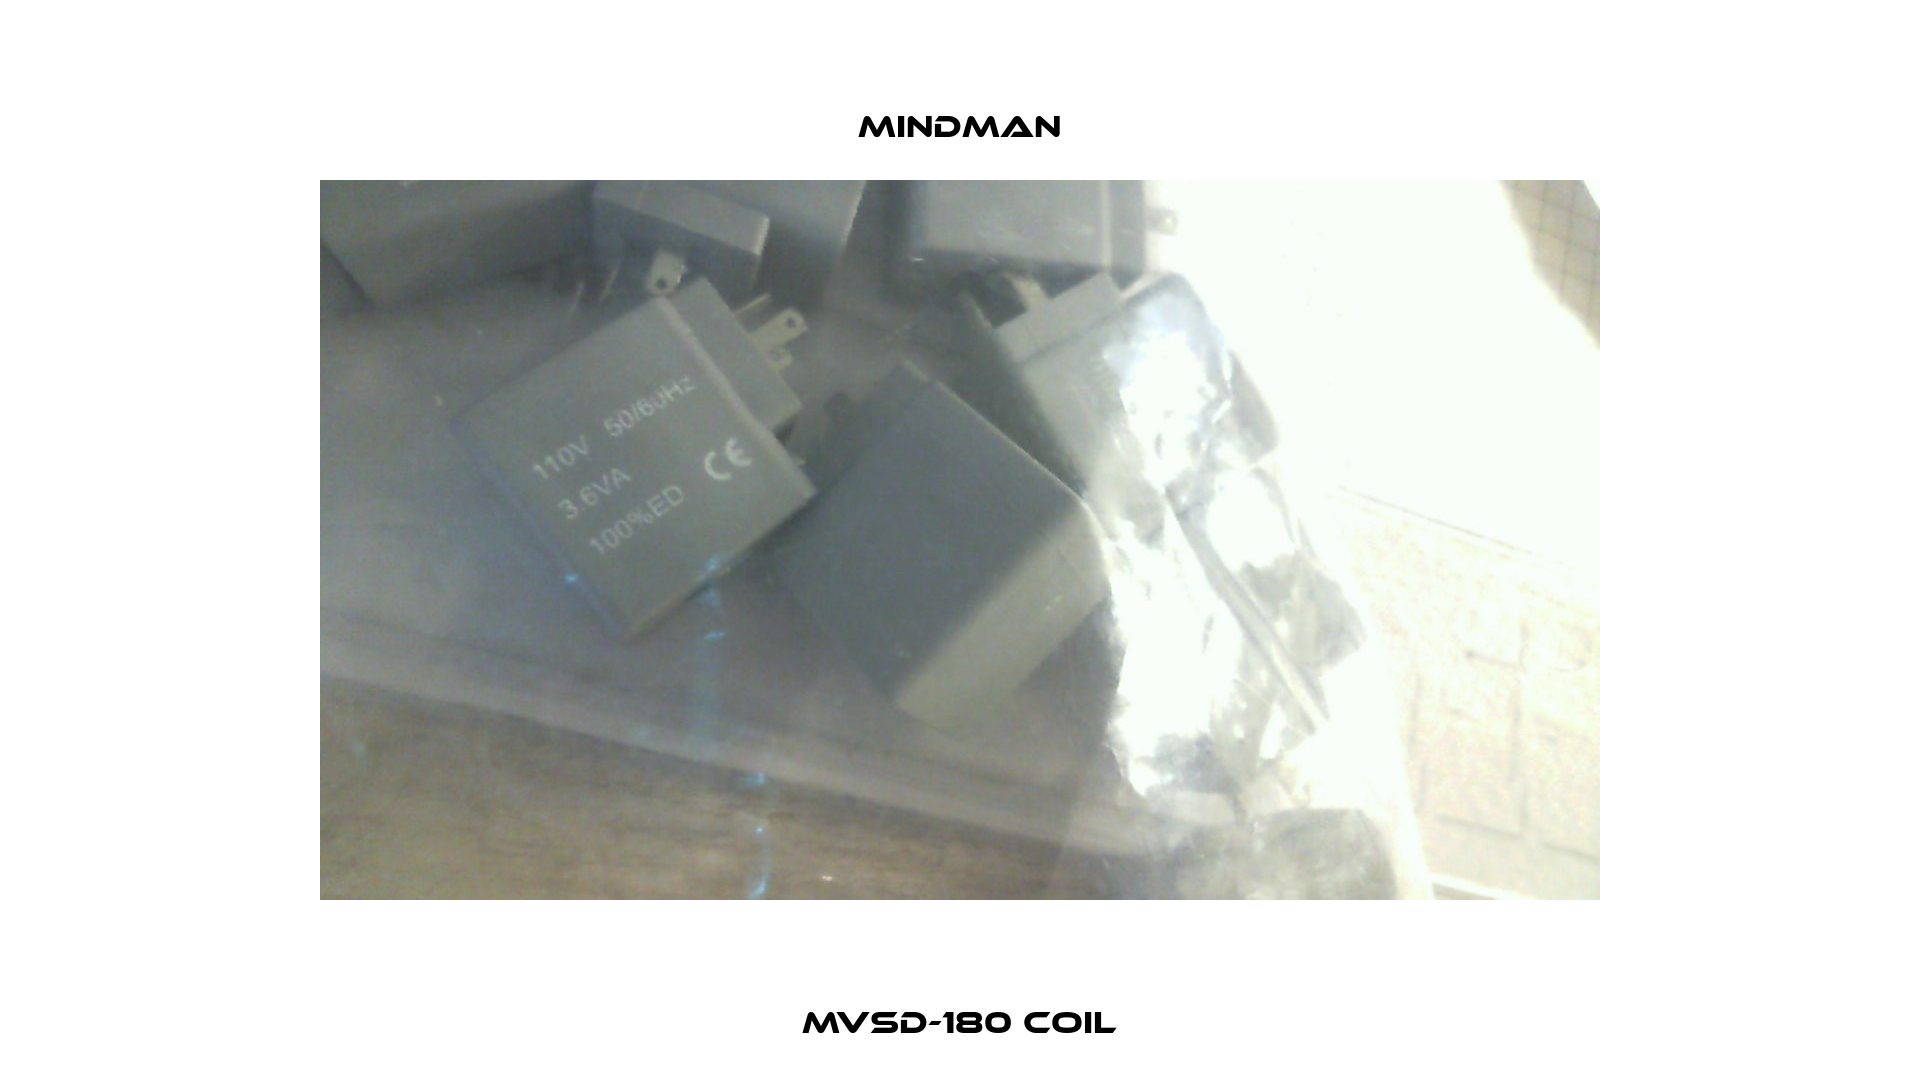 MVSD-180 Coil Mindman